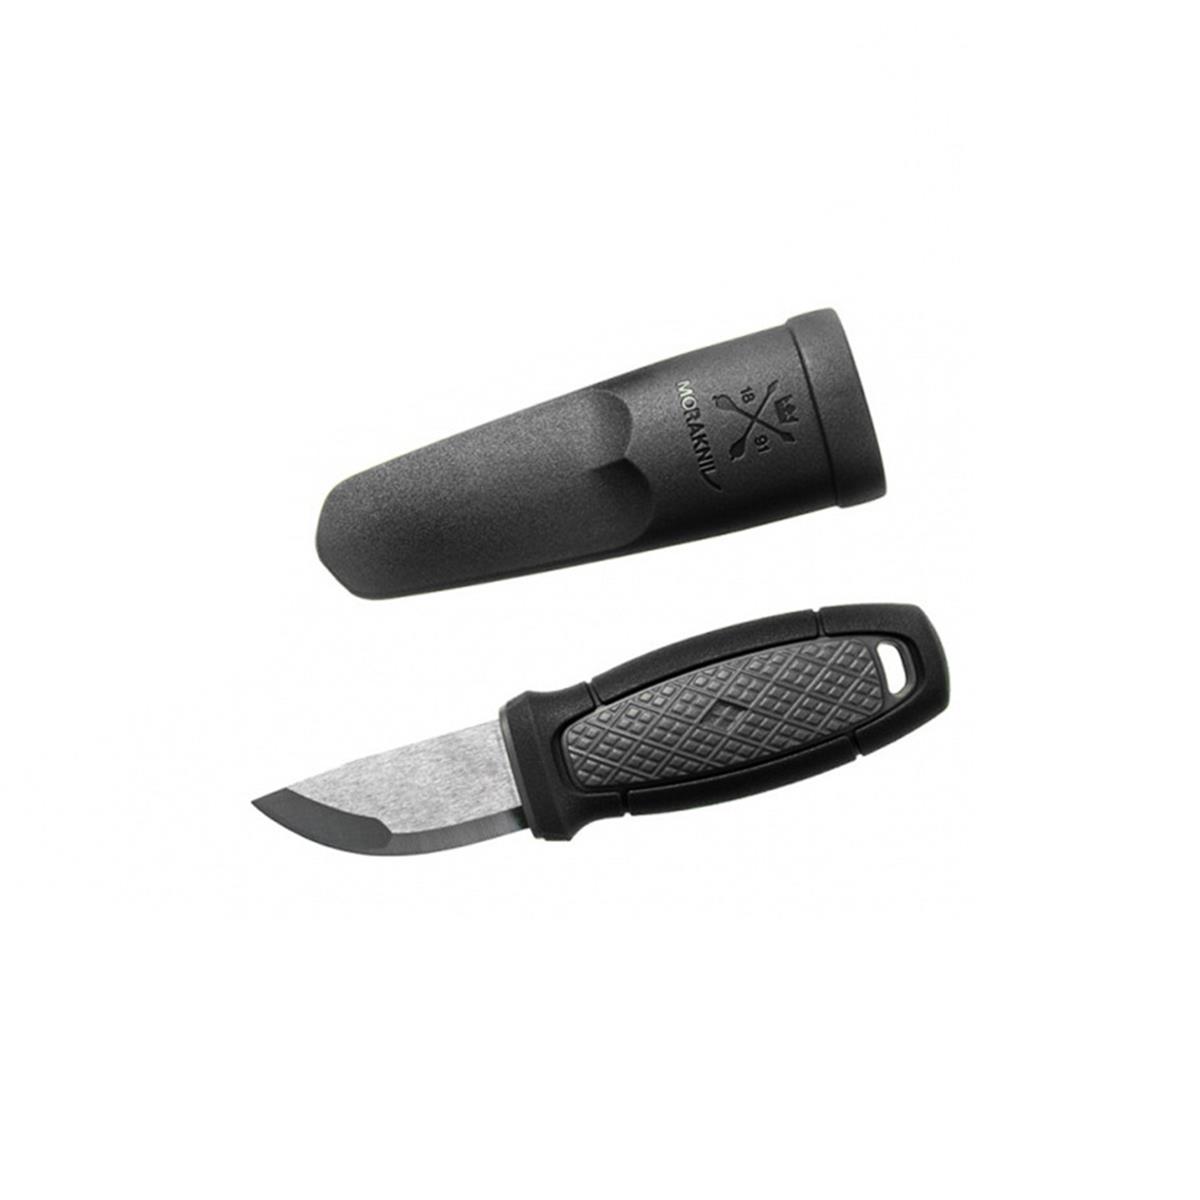 Нож Eldris Black (нержавеющая сталь, лезвие 56/2,0 мм) (12647) Morakniv нож kniv craftline q allround 0711 11481 morakniv